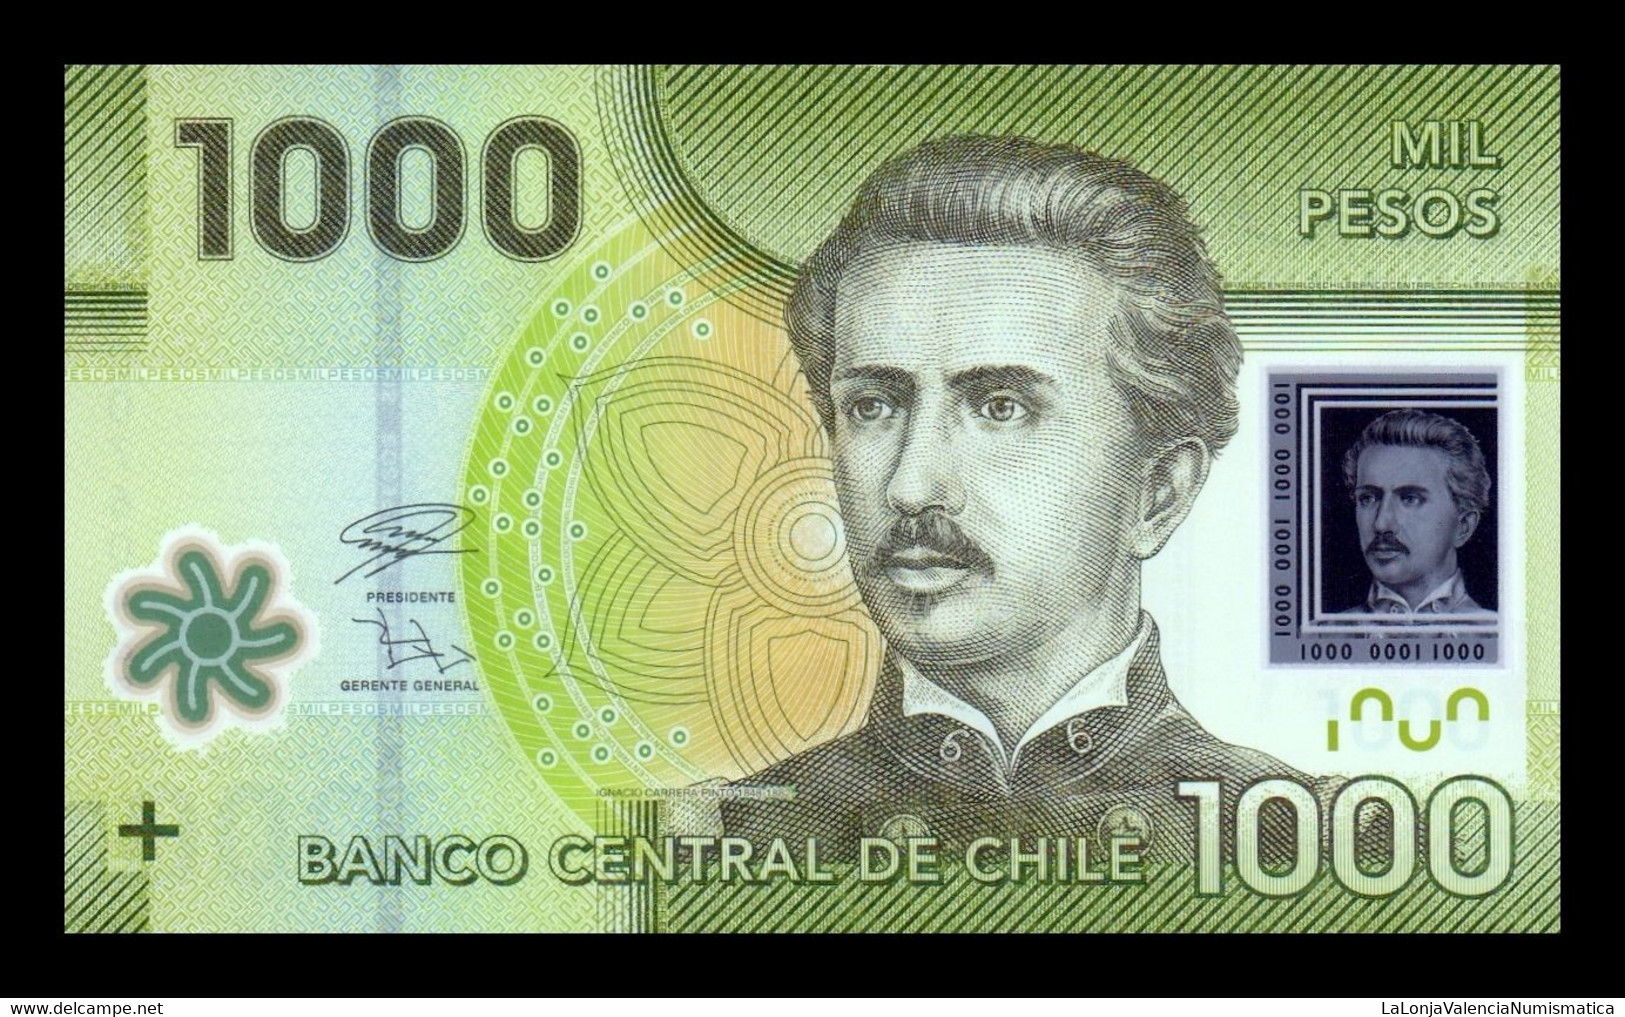 Chile 1000 Pesos 2020 Pick 161 New Polymer SC UNC - Chile